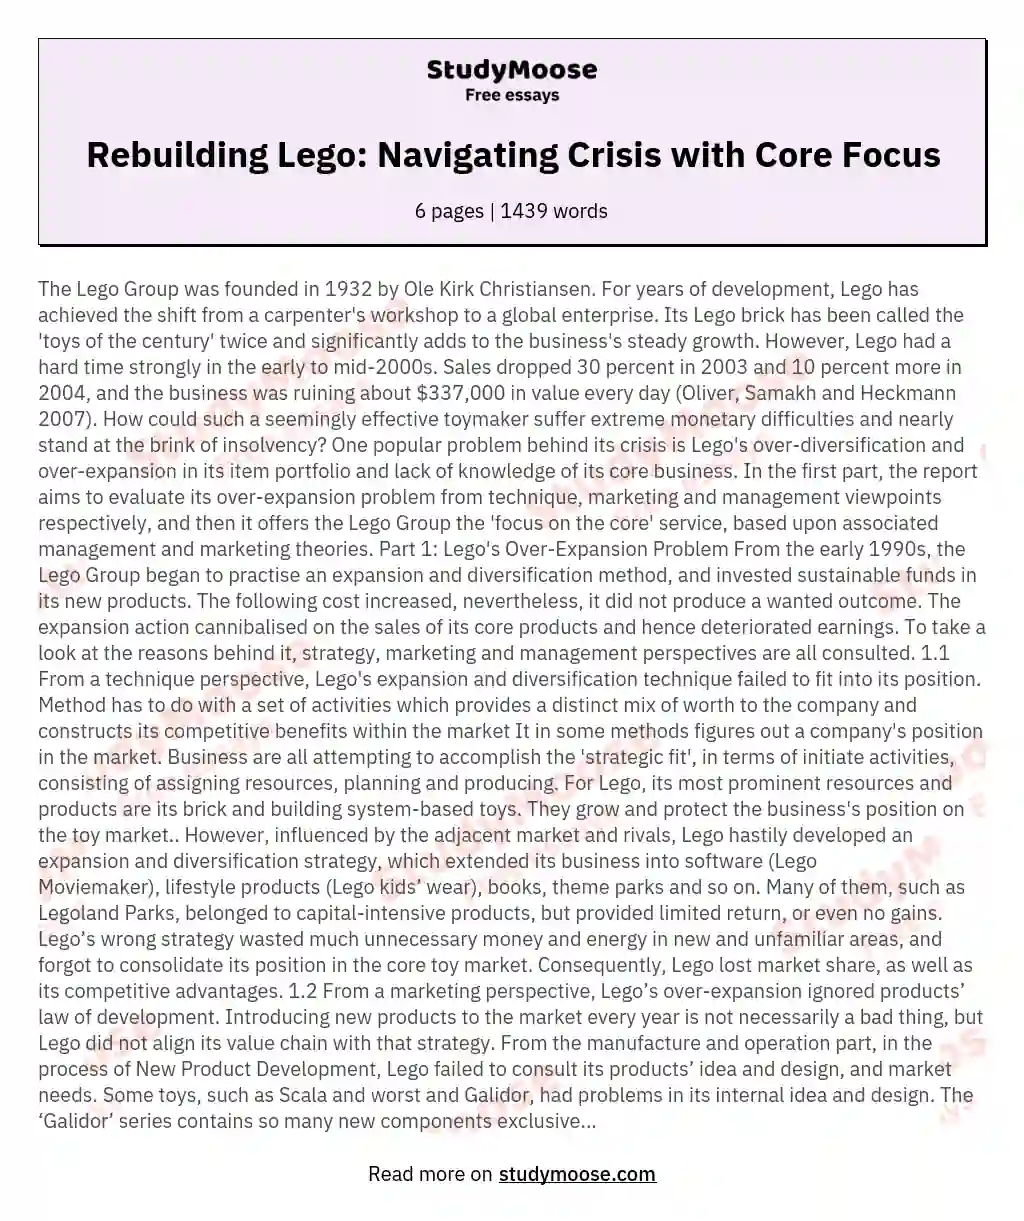 Rebuilding Lego: Navigating Crisis with Core Focus essay